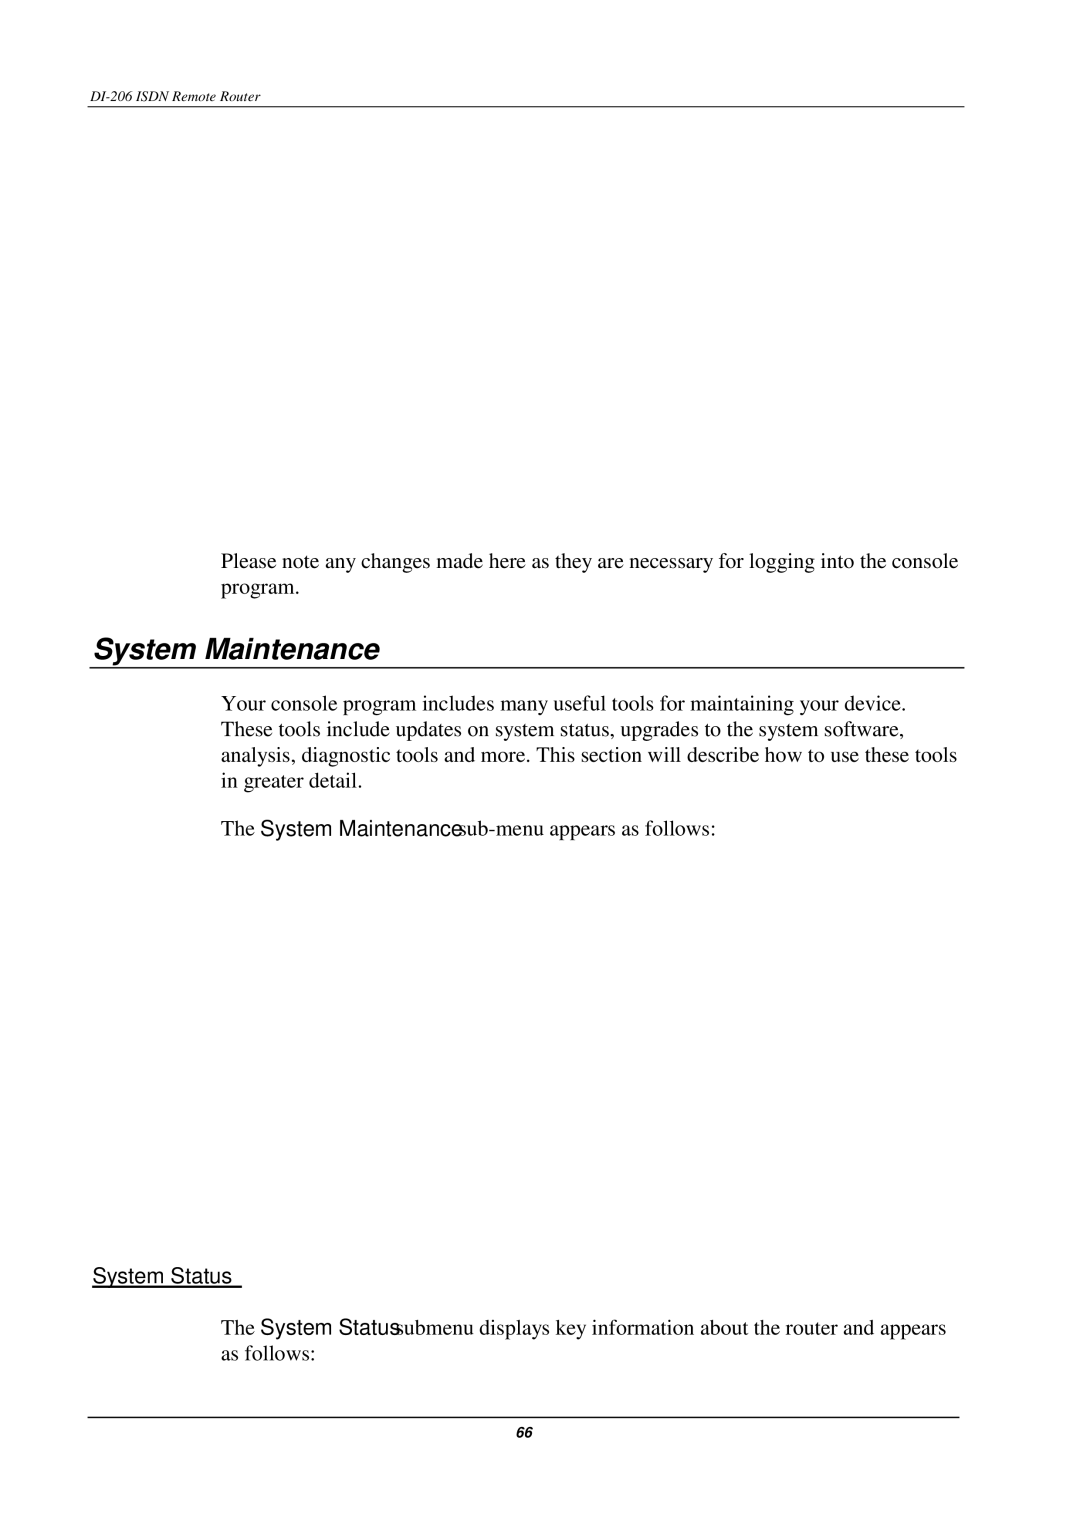 D-Link DI-206 manual System Maintenance, System Status 